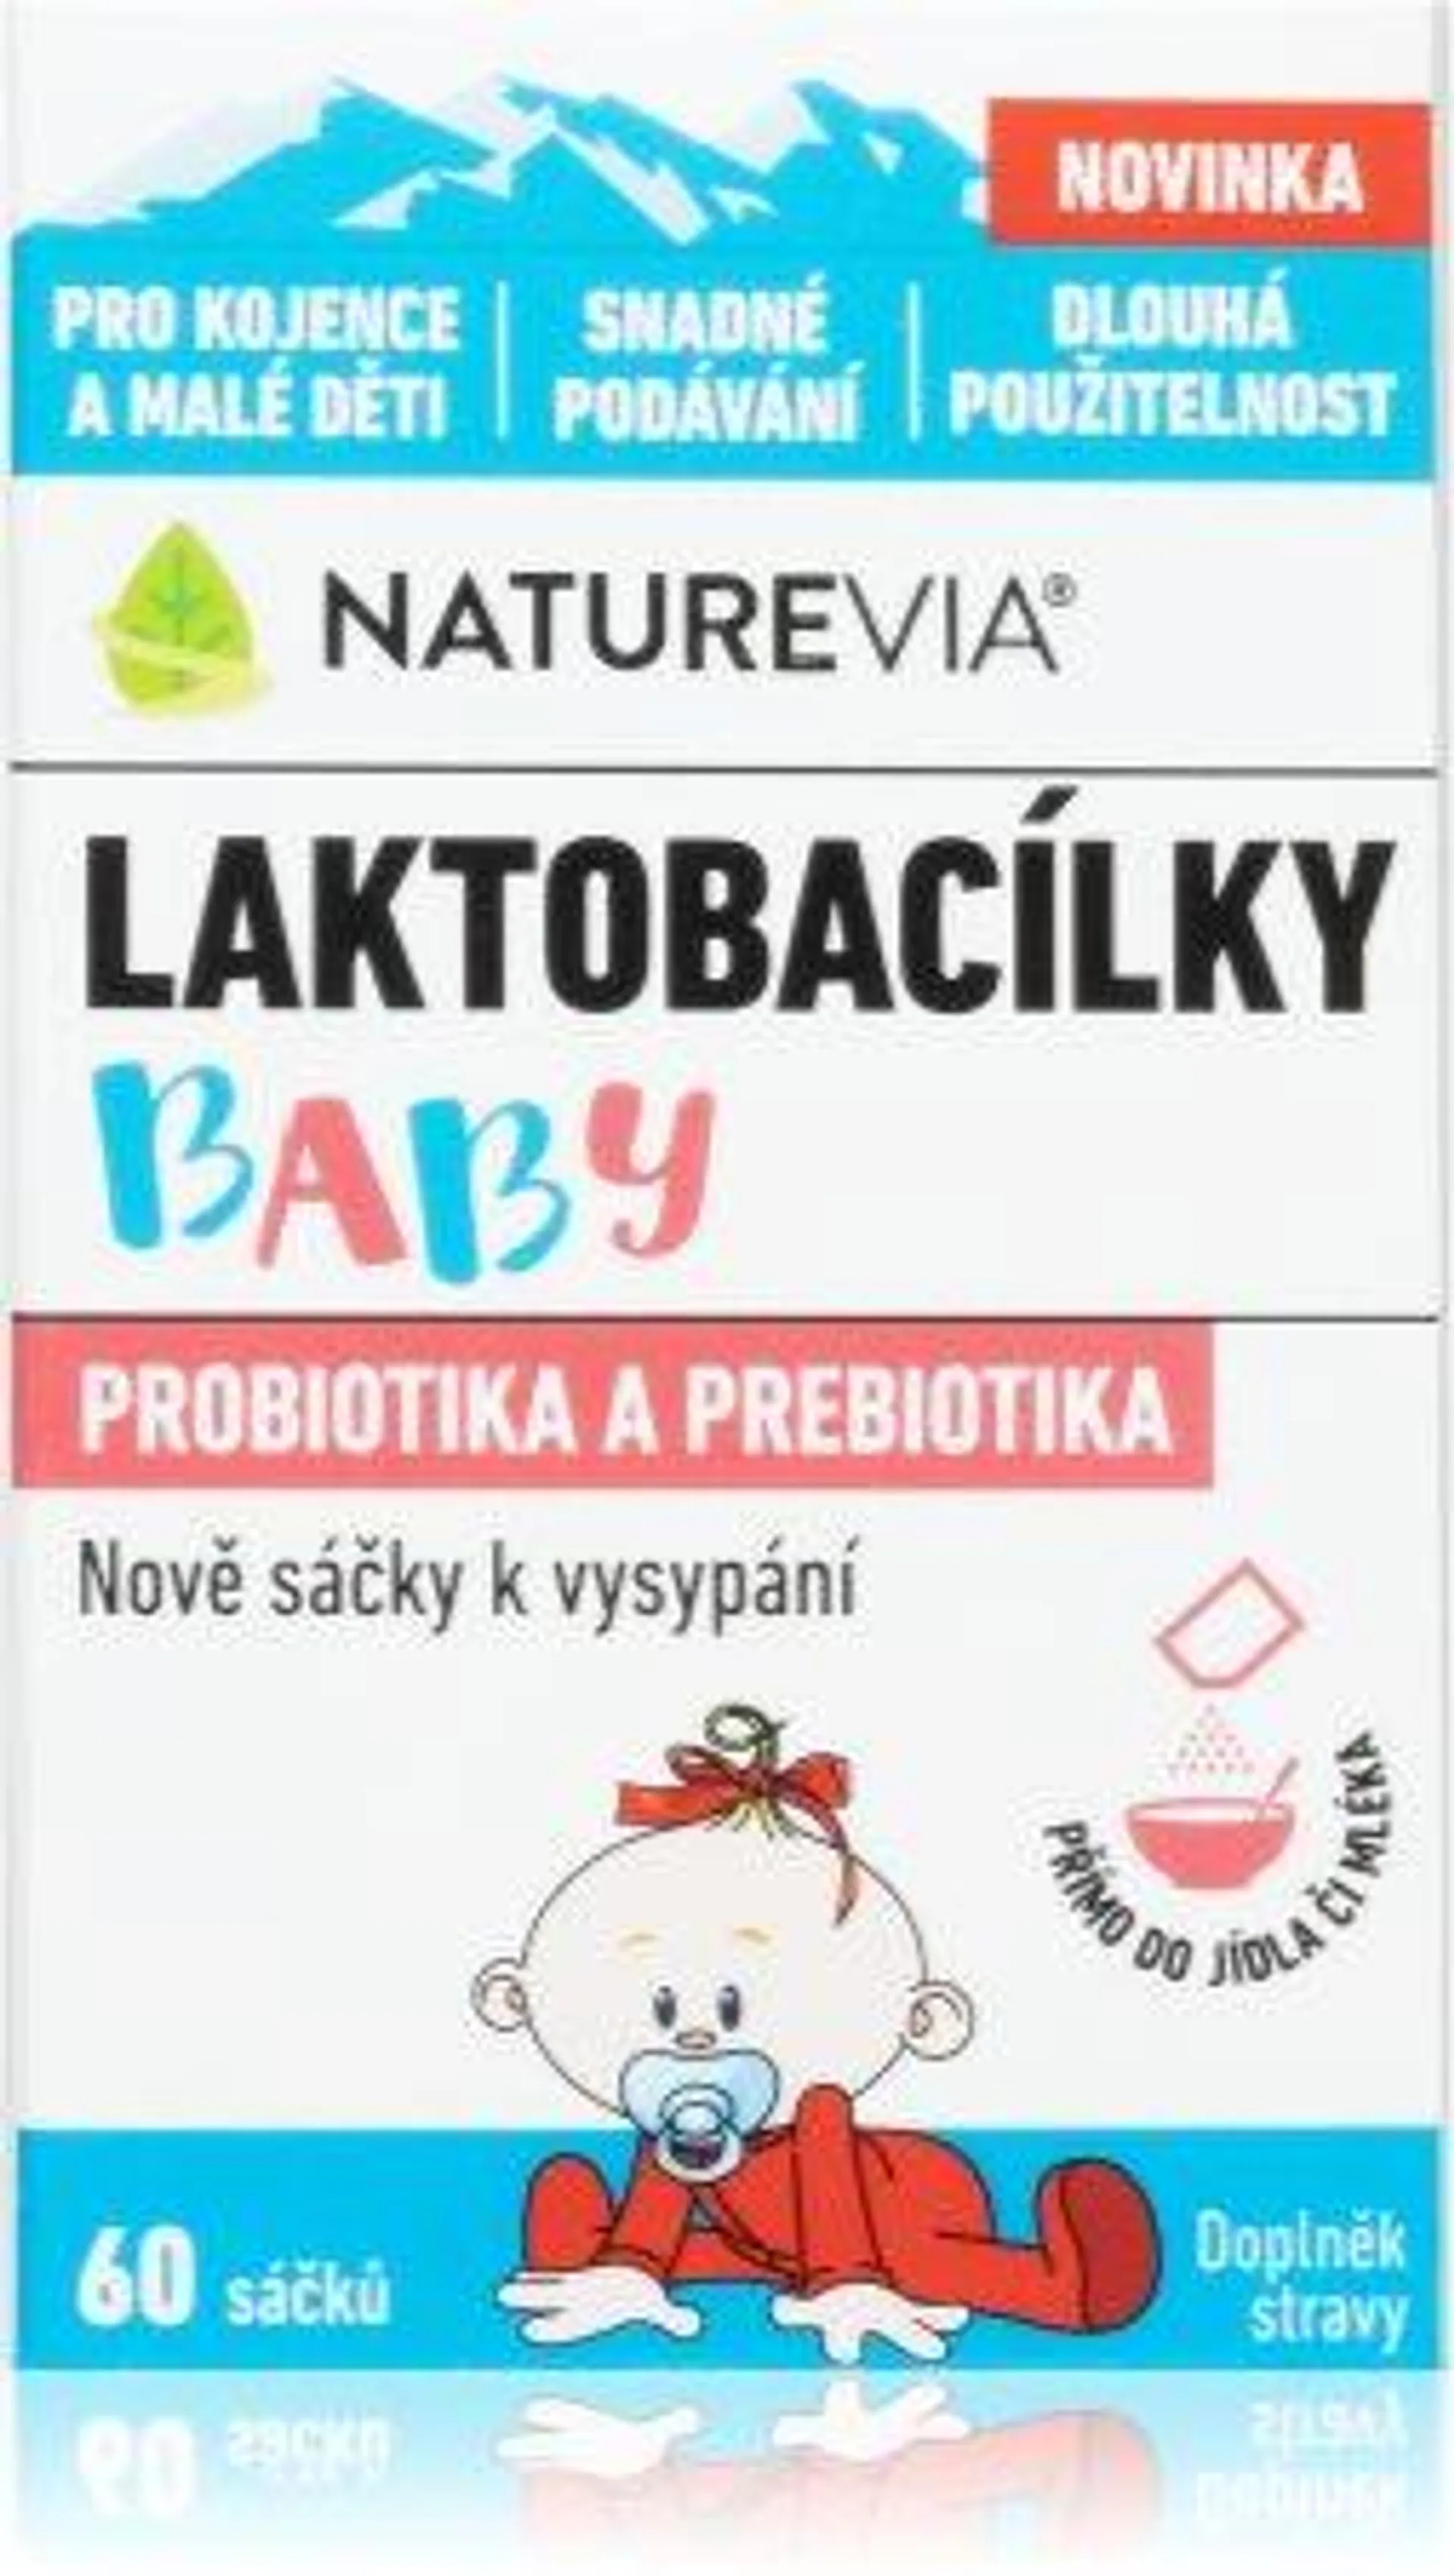 Laktobacílky baby